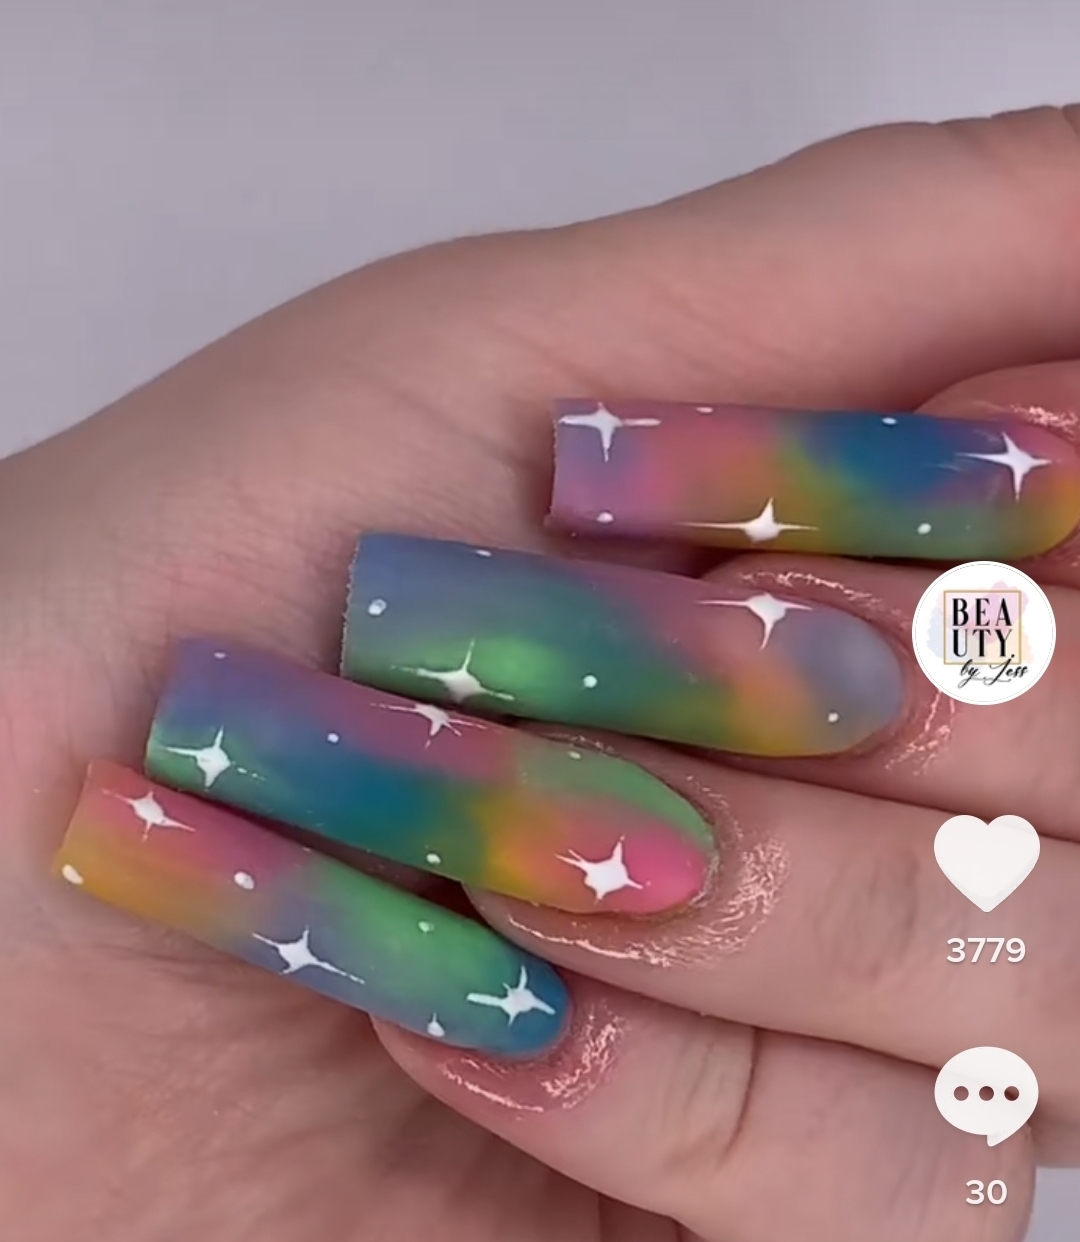 Colourful nails by Jess Swinburne.